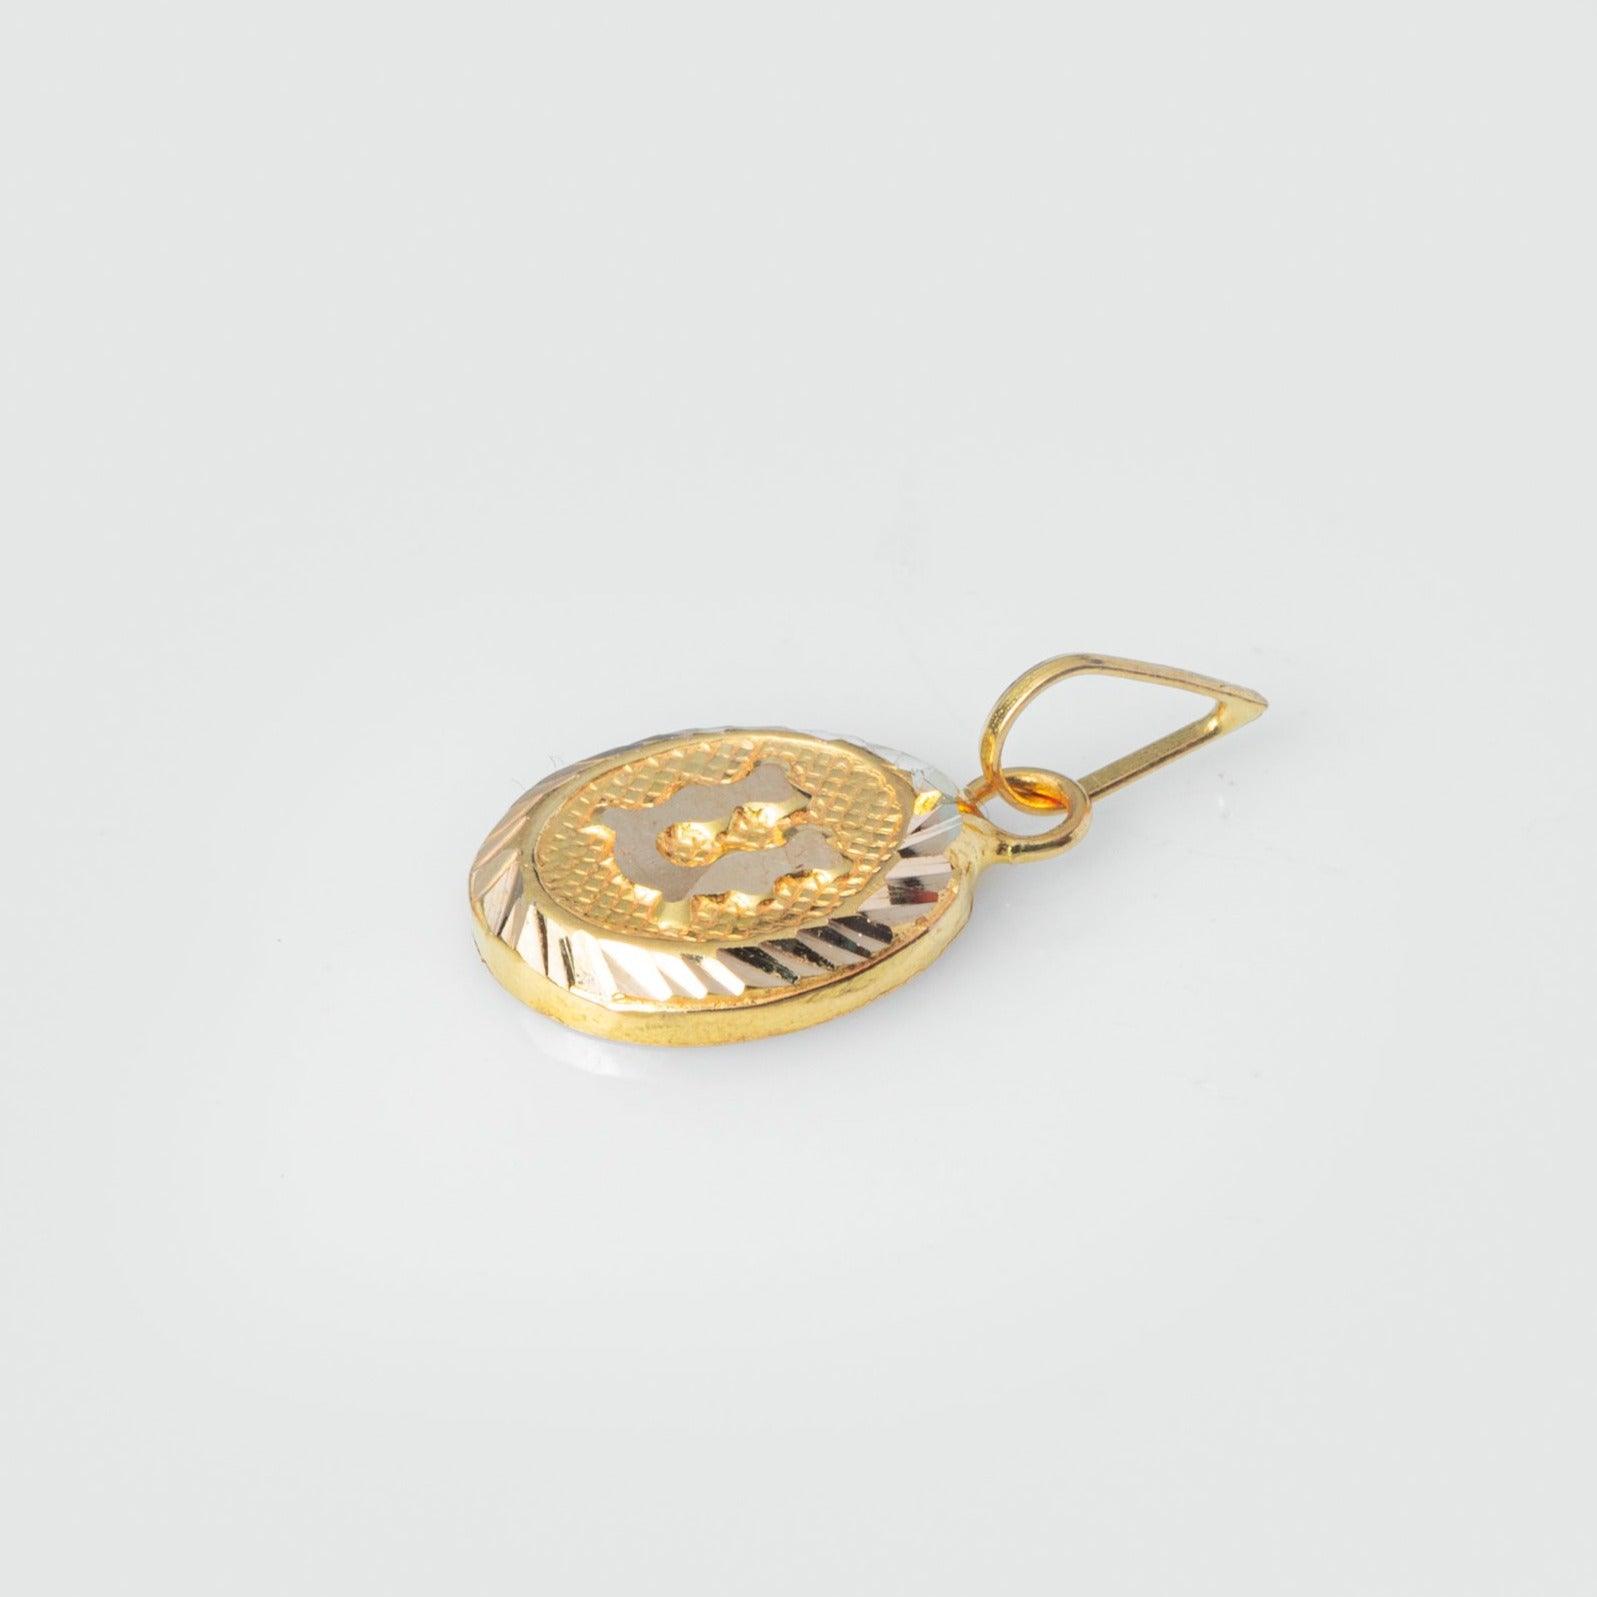 'U' 22ct Gold Initial Pendant P-7550 - Minar Jewellers